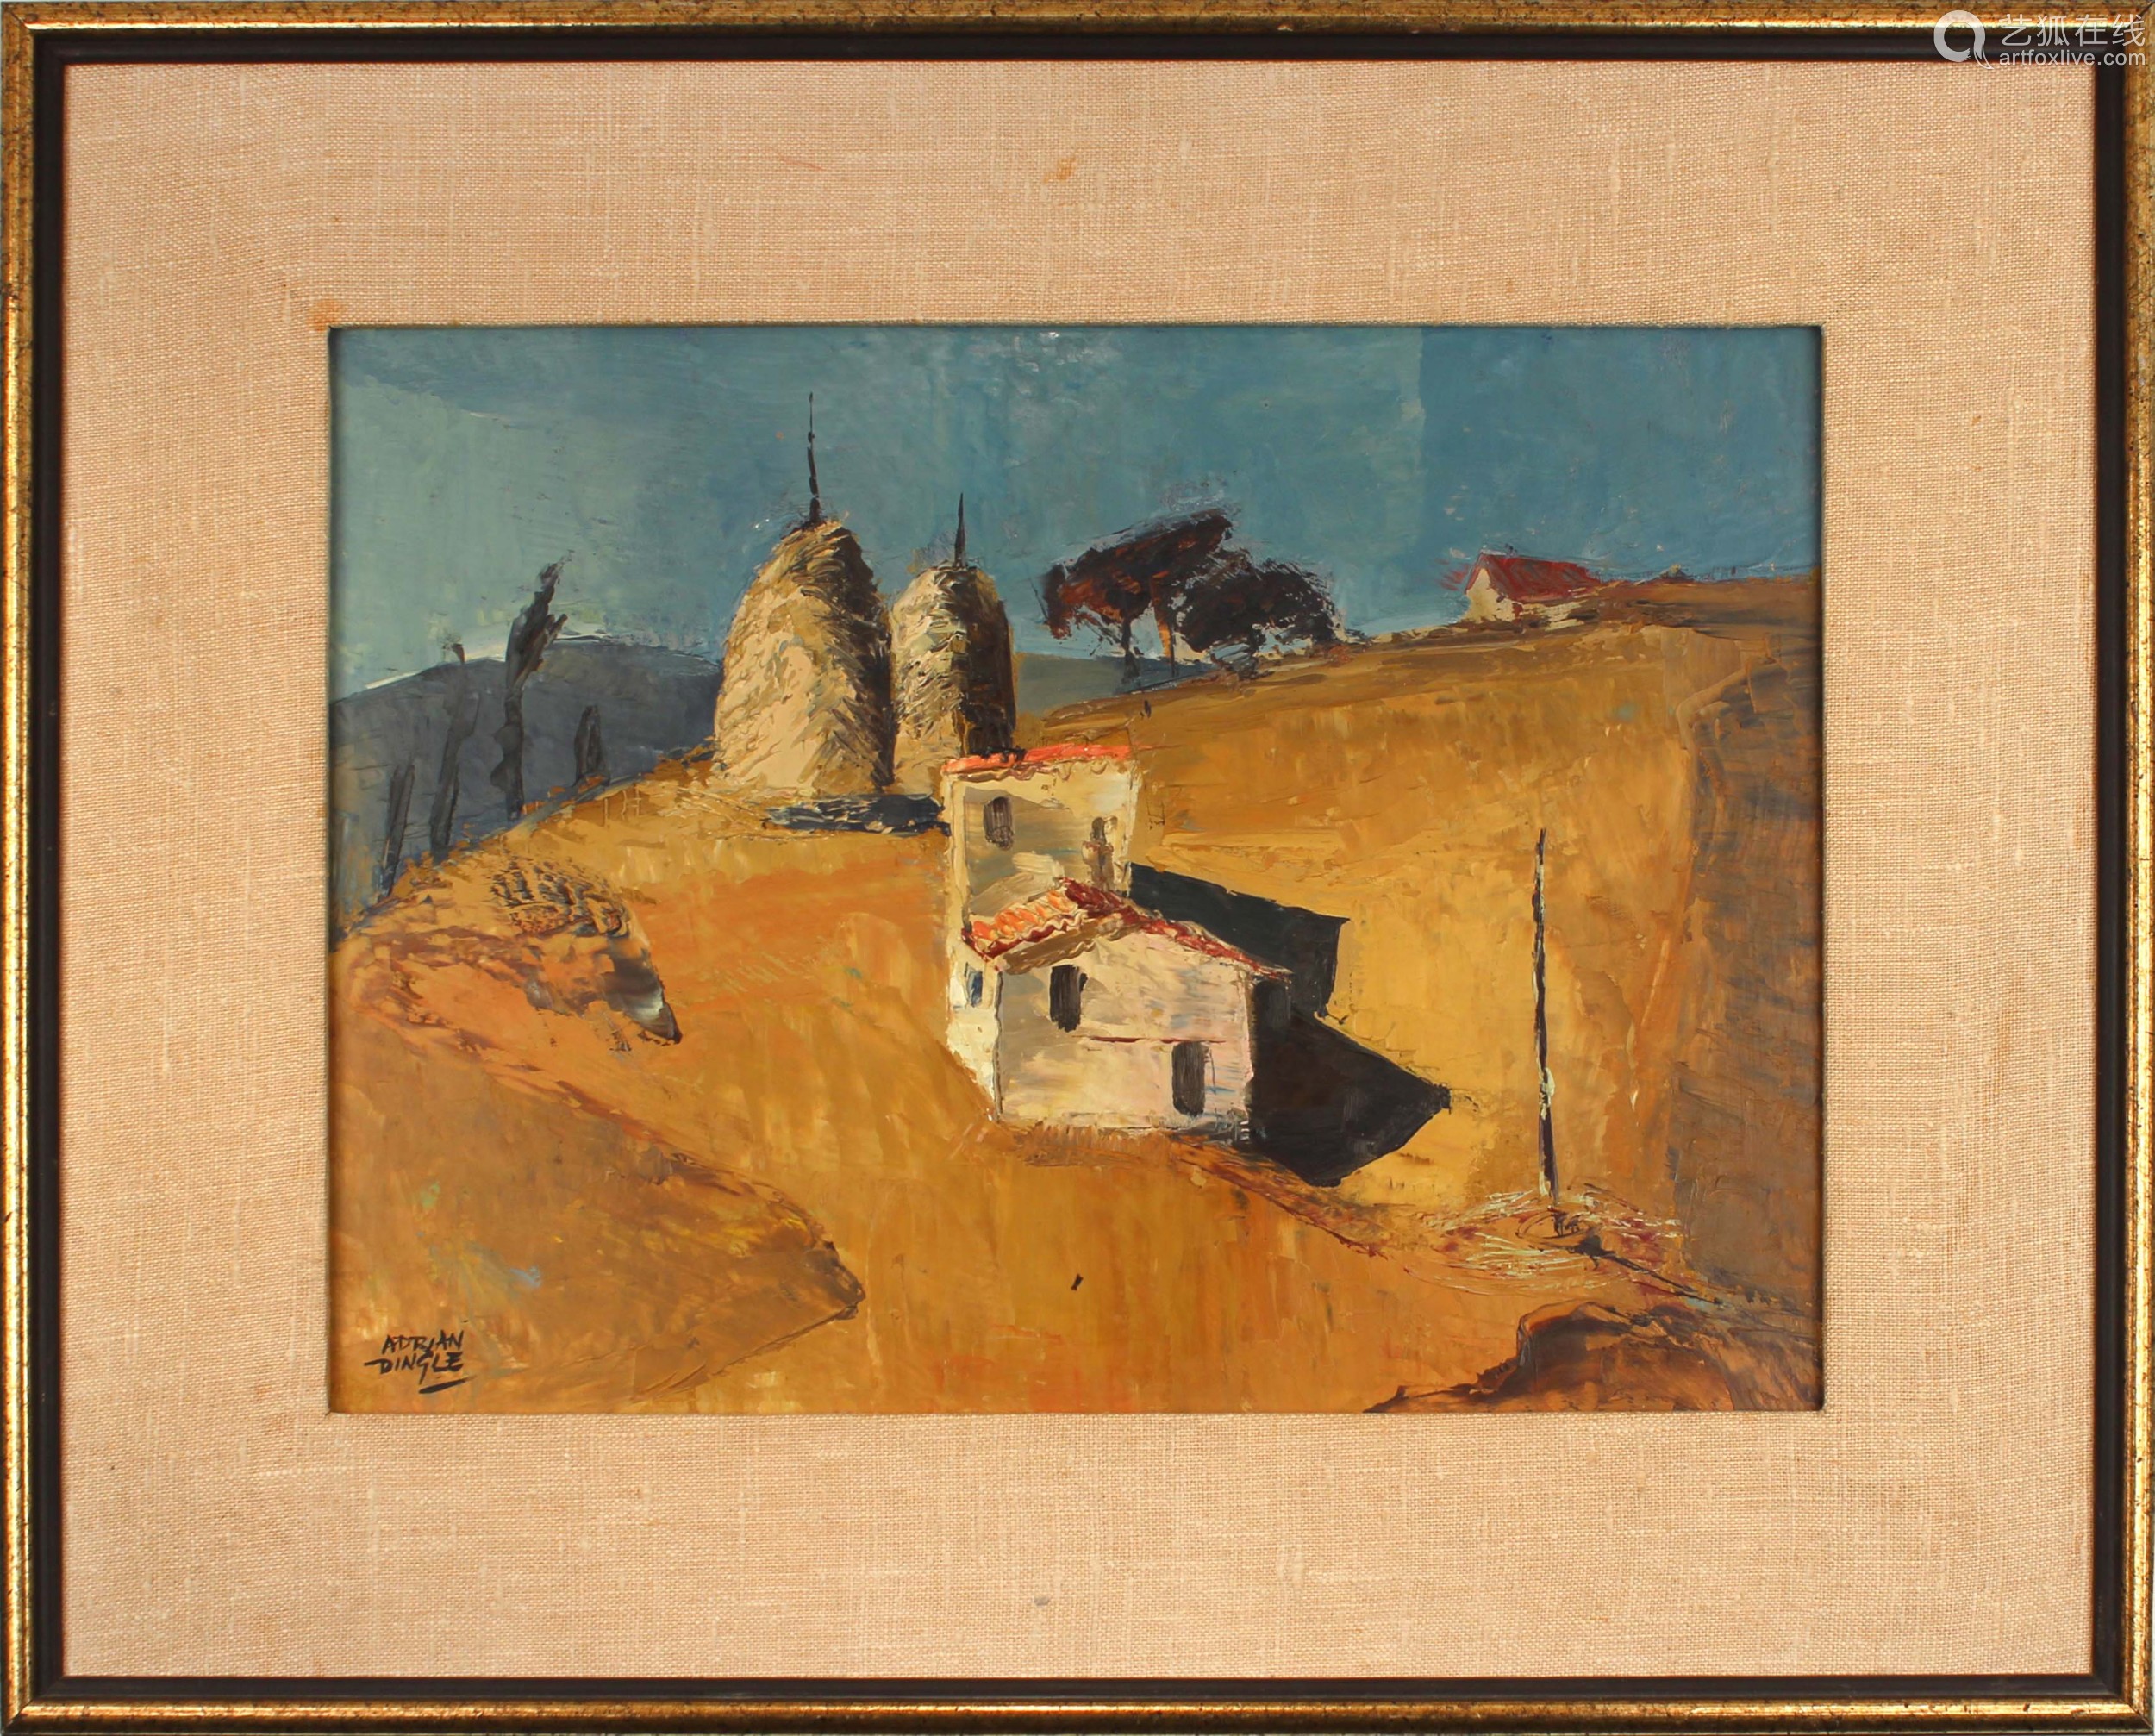 aprian dingle(1911—1974 板面油画农场小屋